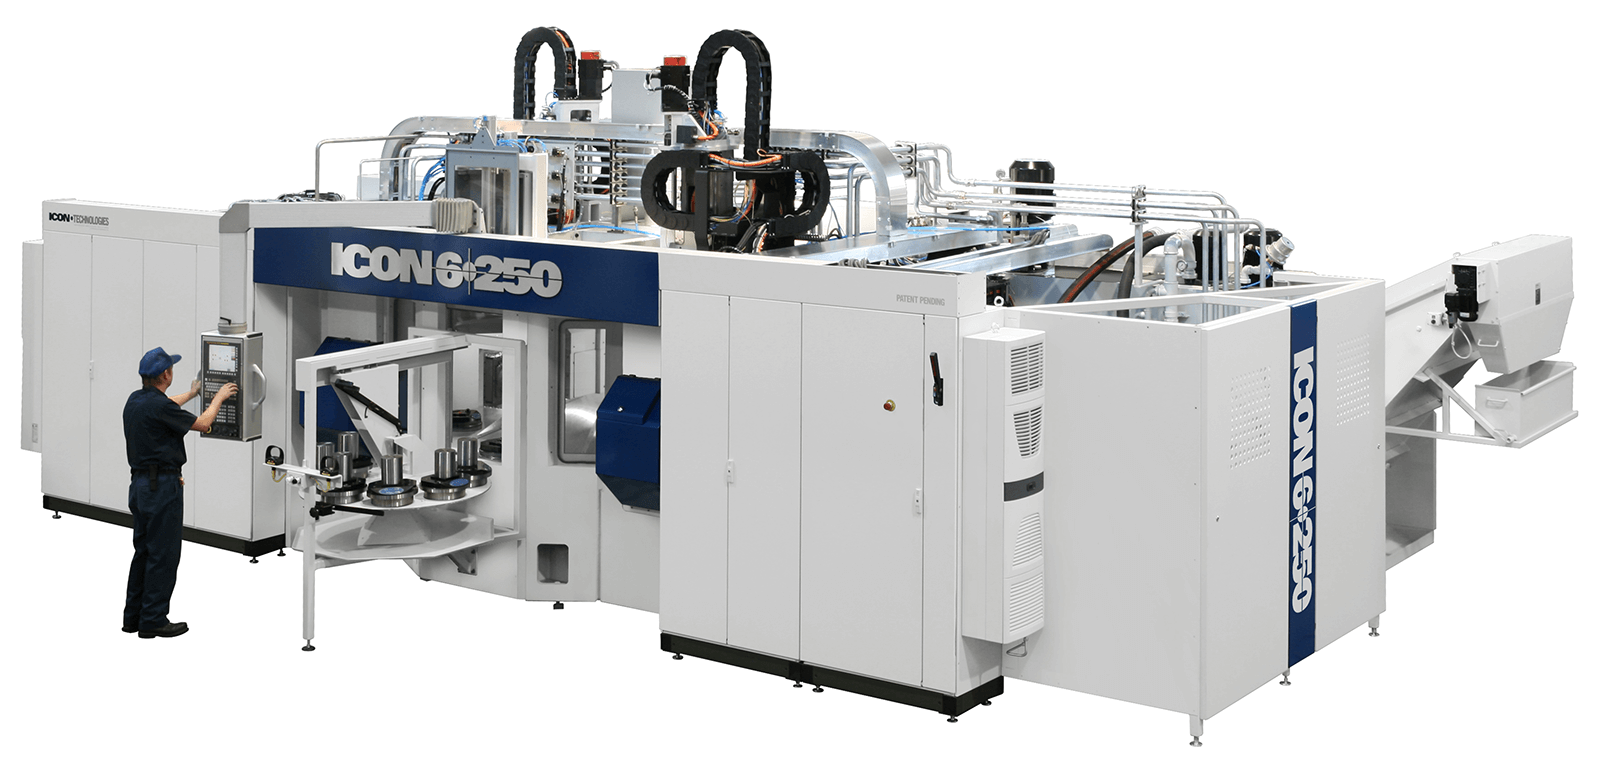 ICON Technologies 6-250 Mill/Turn Machine image